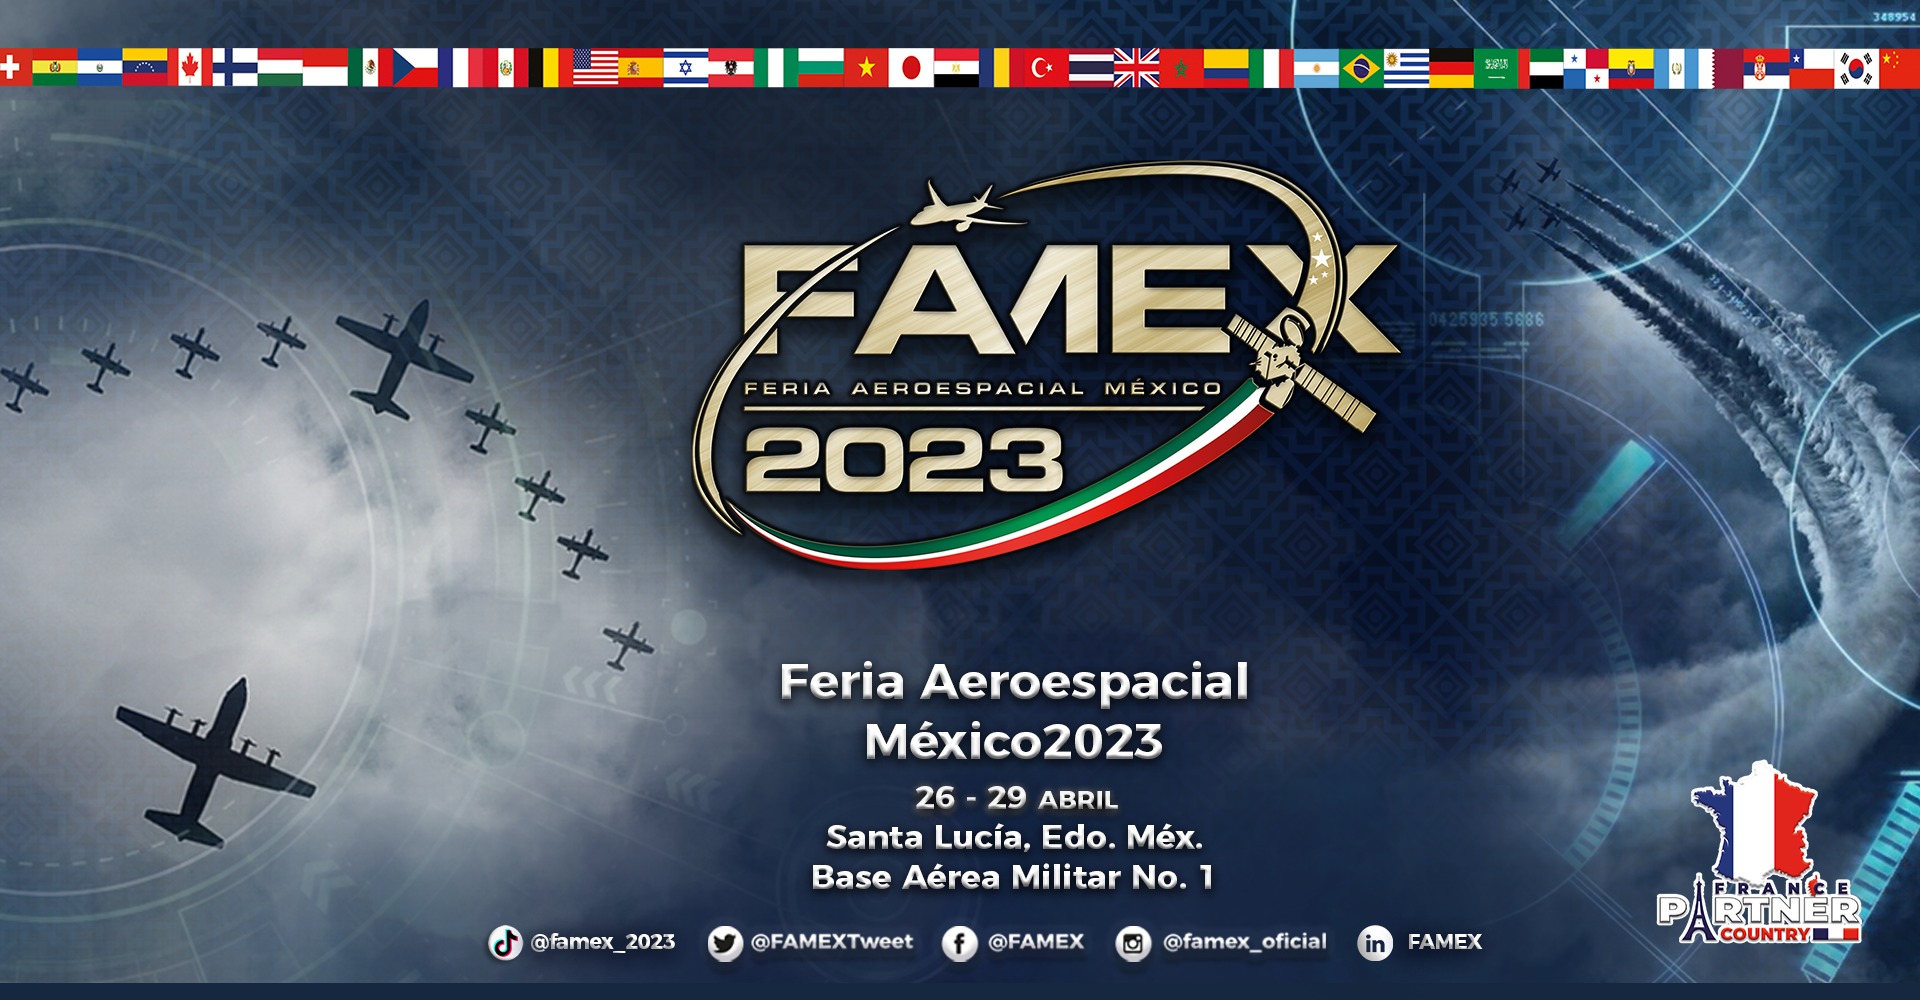 FAMEX 2023 